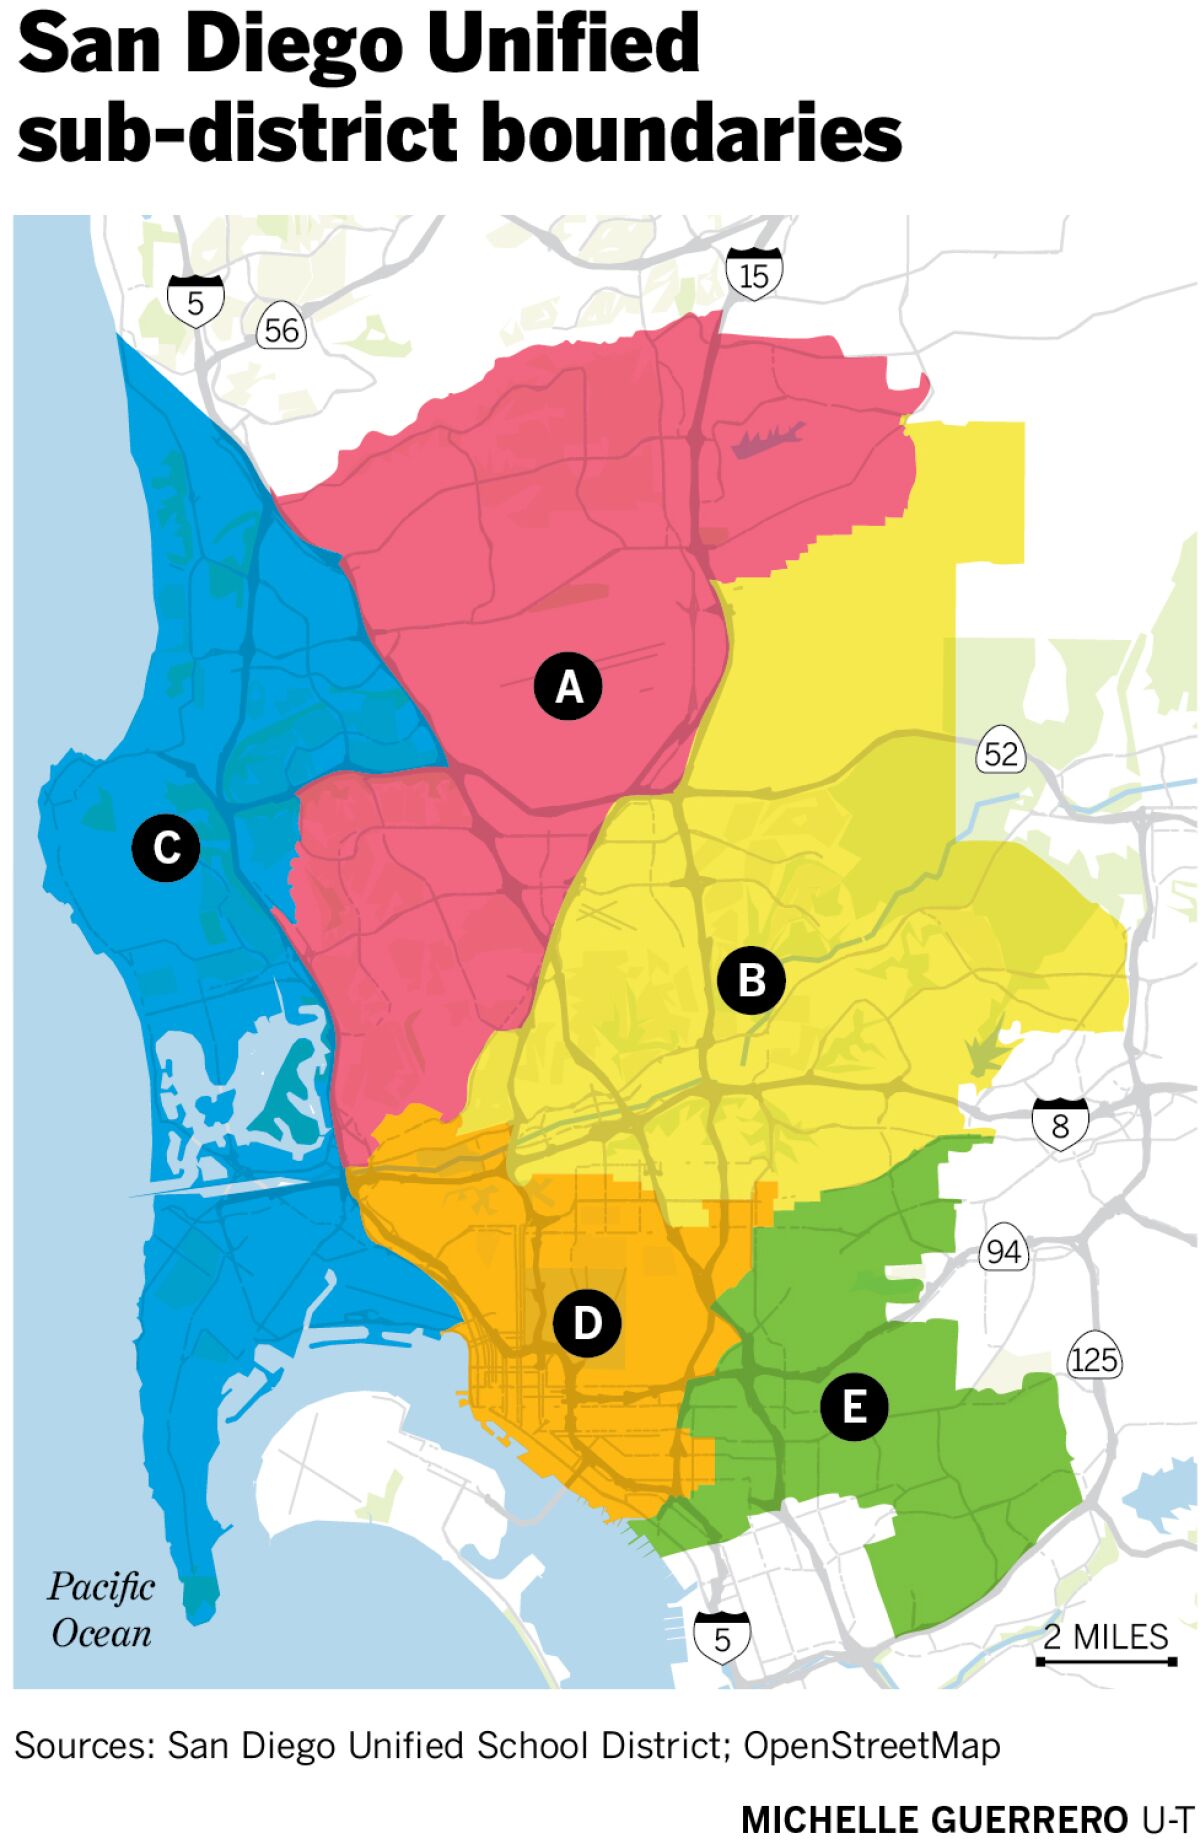 San Diego Unified sub-district boundaries